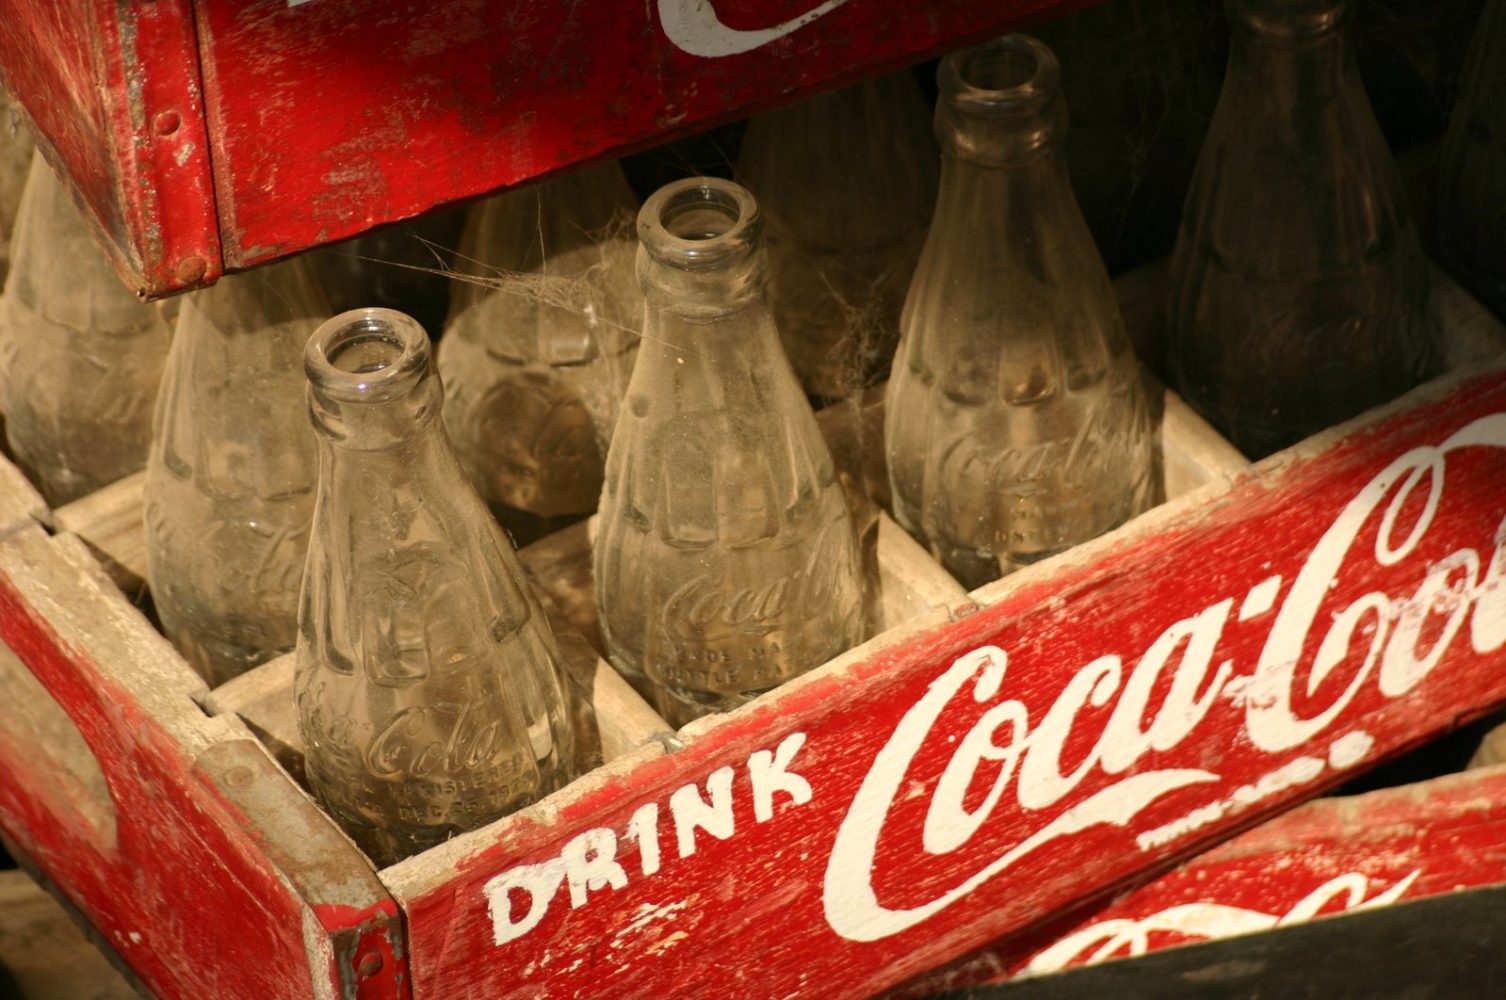 Caisse de Coca cola